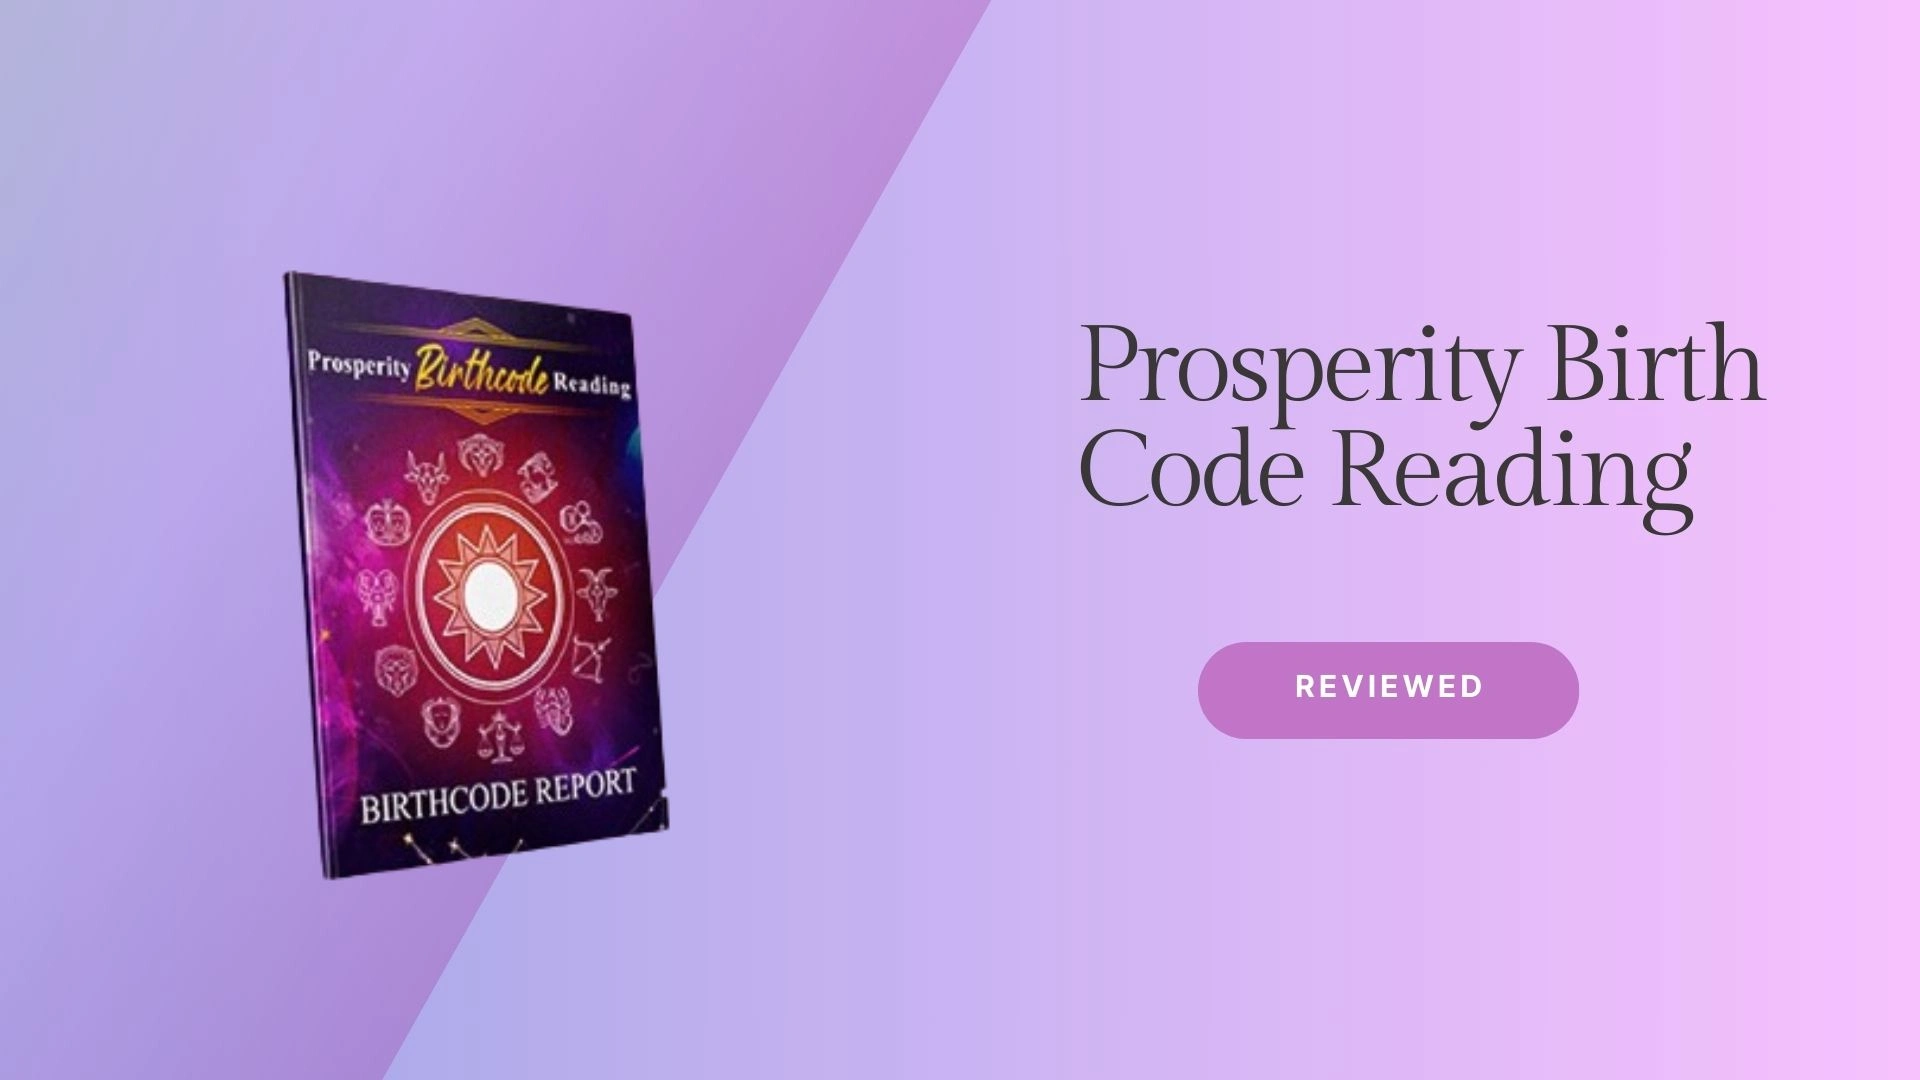 Prosperity Birth Code Reading Reviews